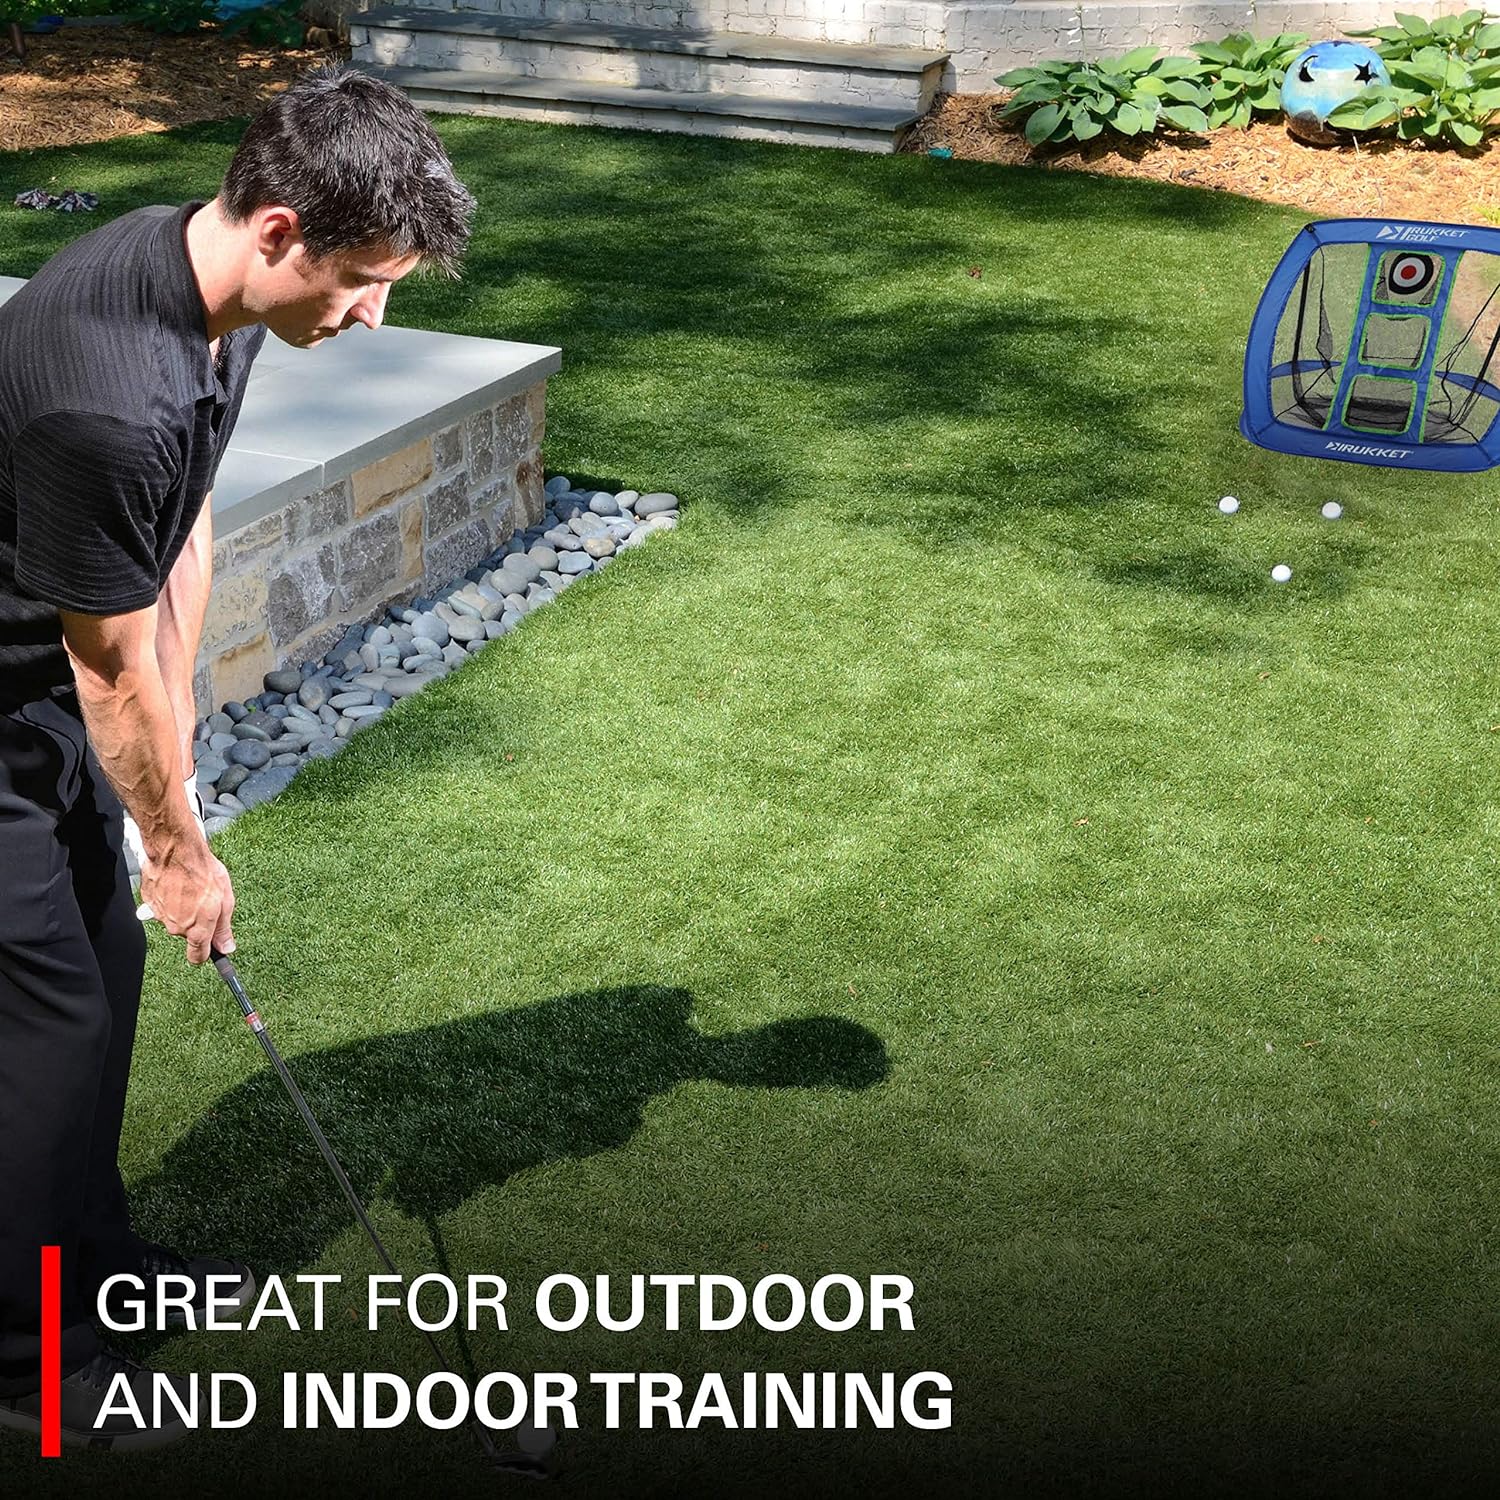 Pop up Golf Chipping Net | Choose Standard or Light-Up | Outdoor/Indoor Golfing Target Accessories and Backyard Practice Swing Game | Includes Foam Practice Balls